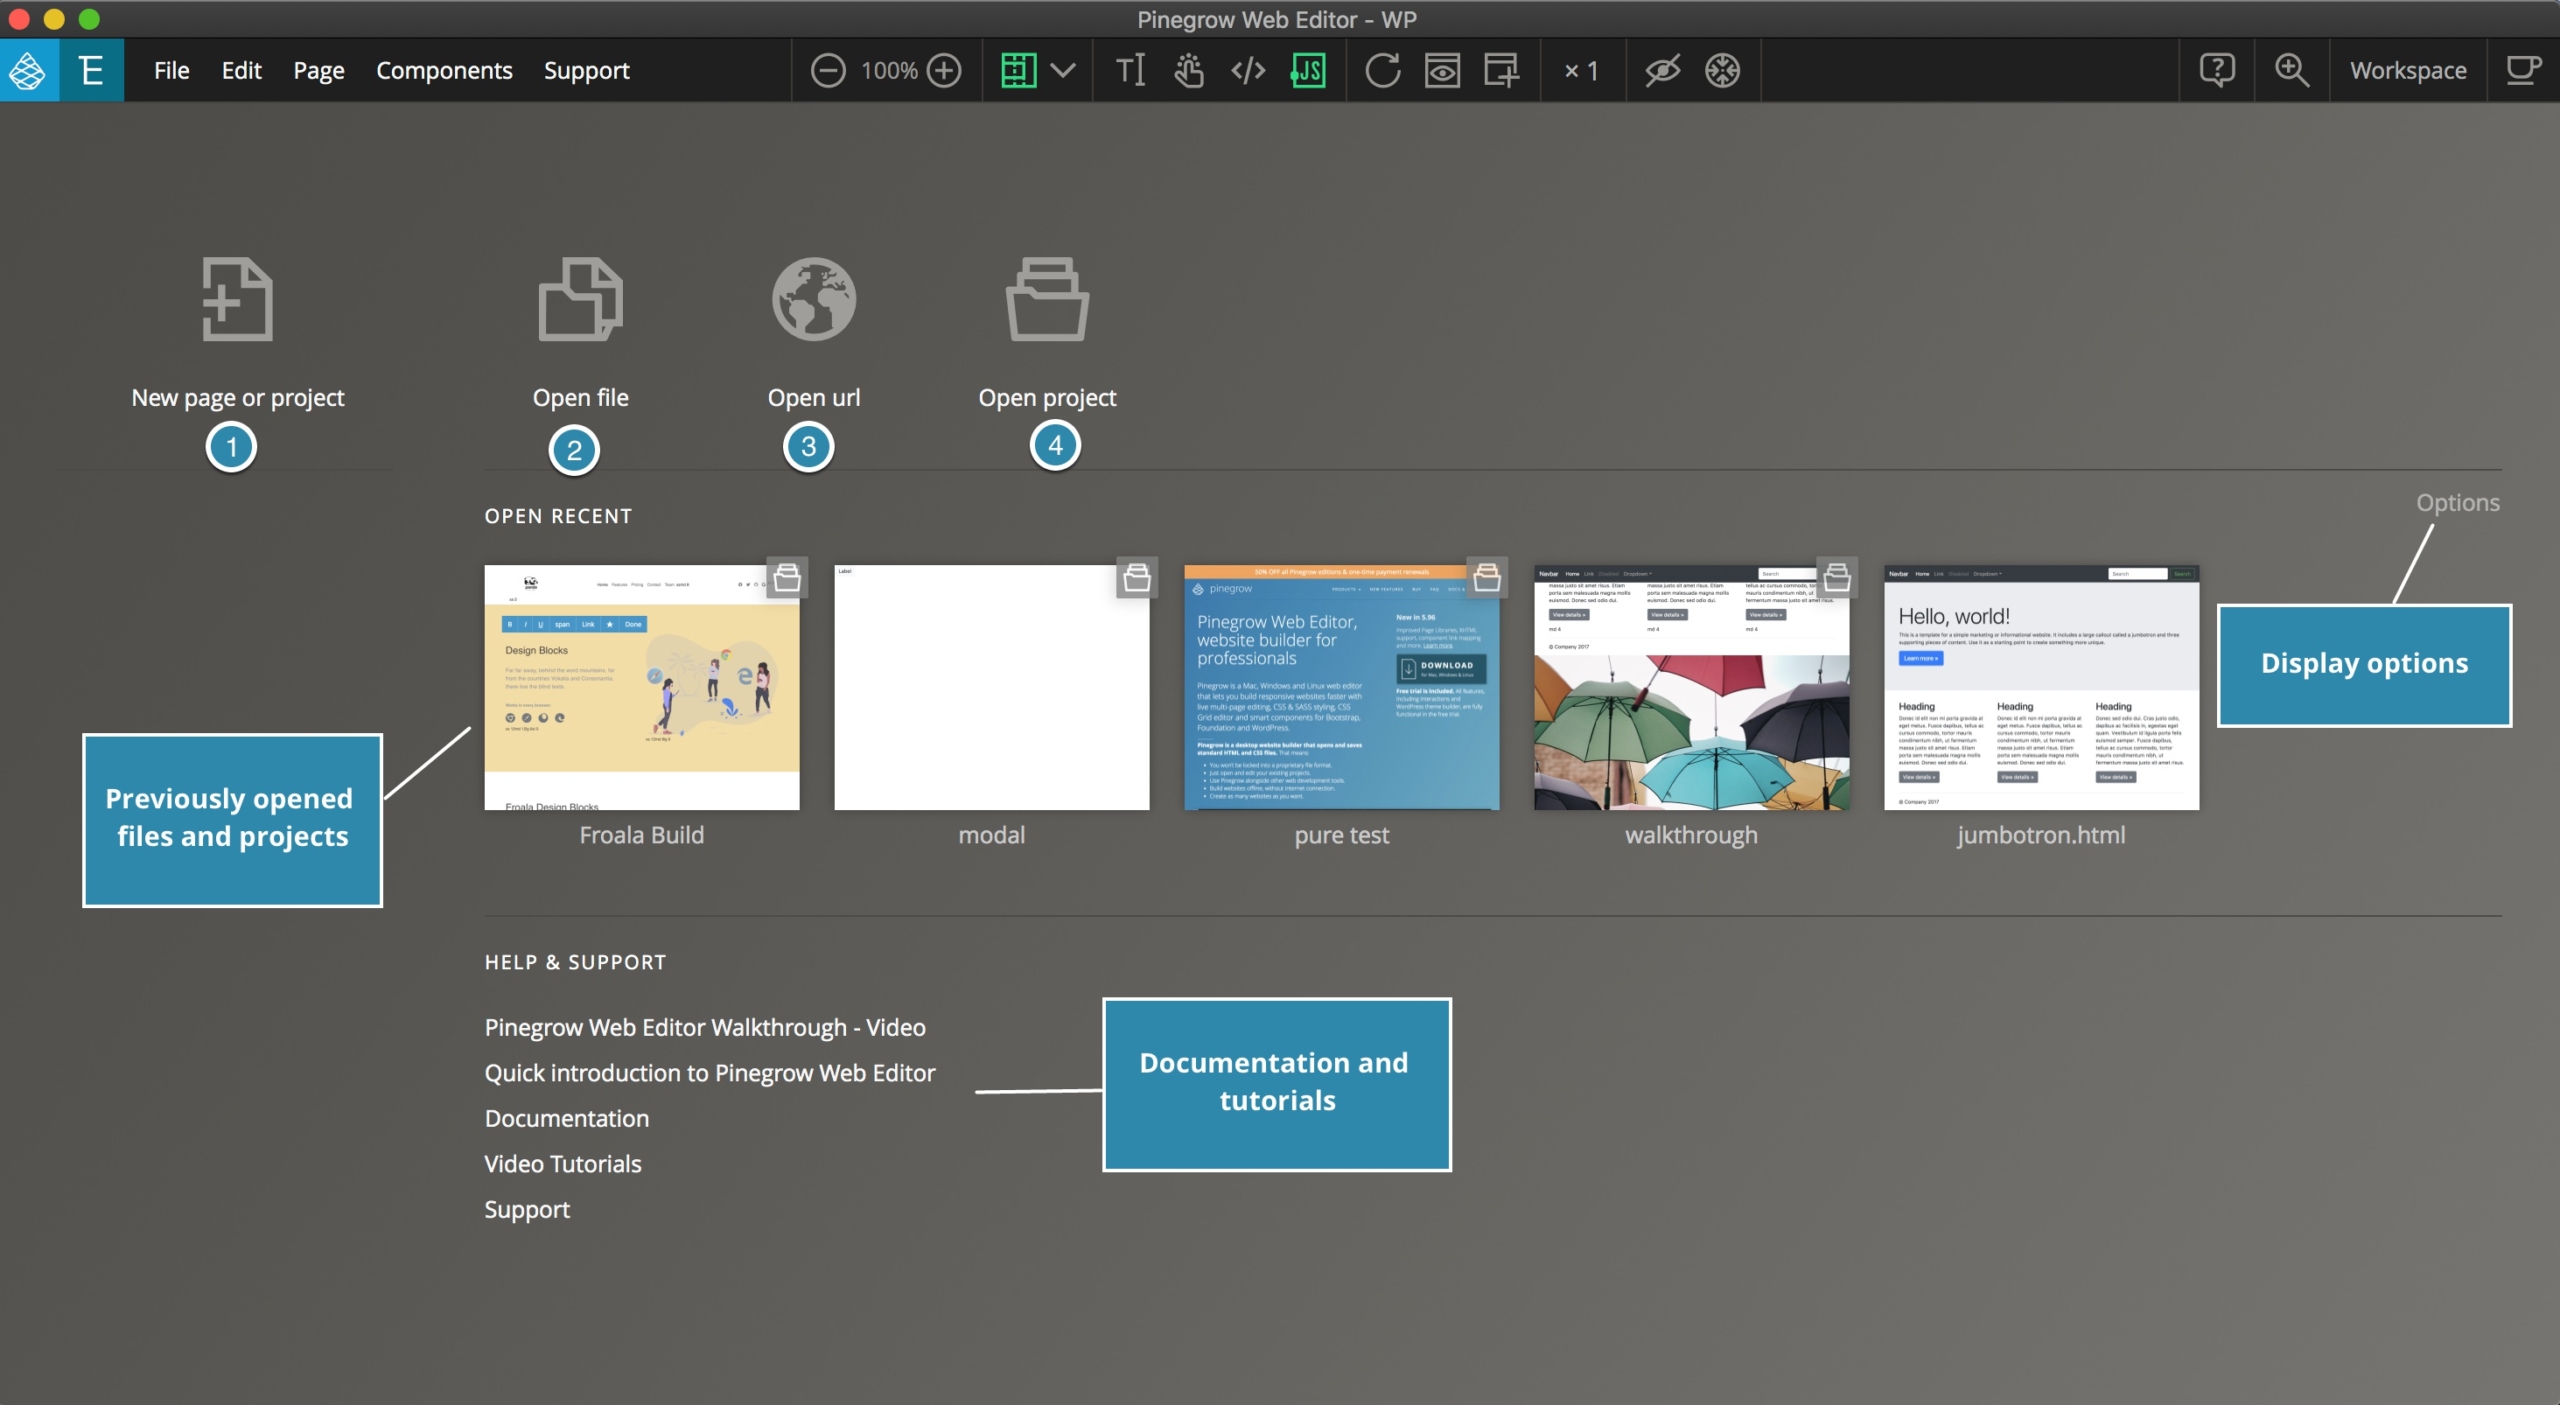 Screenshot of the Pinegrow Web Editor start screen